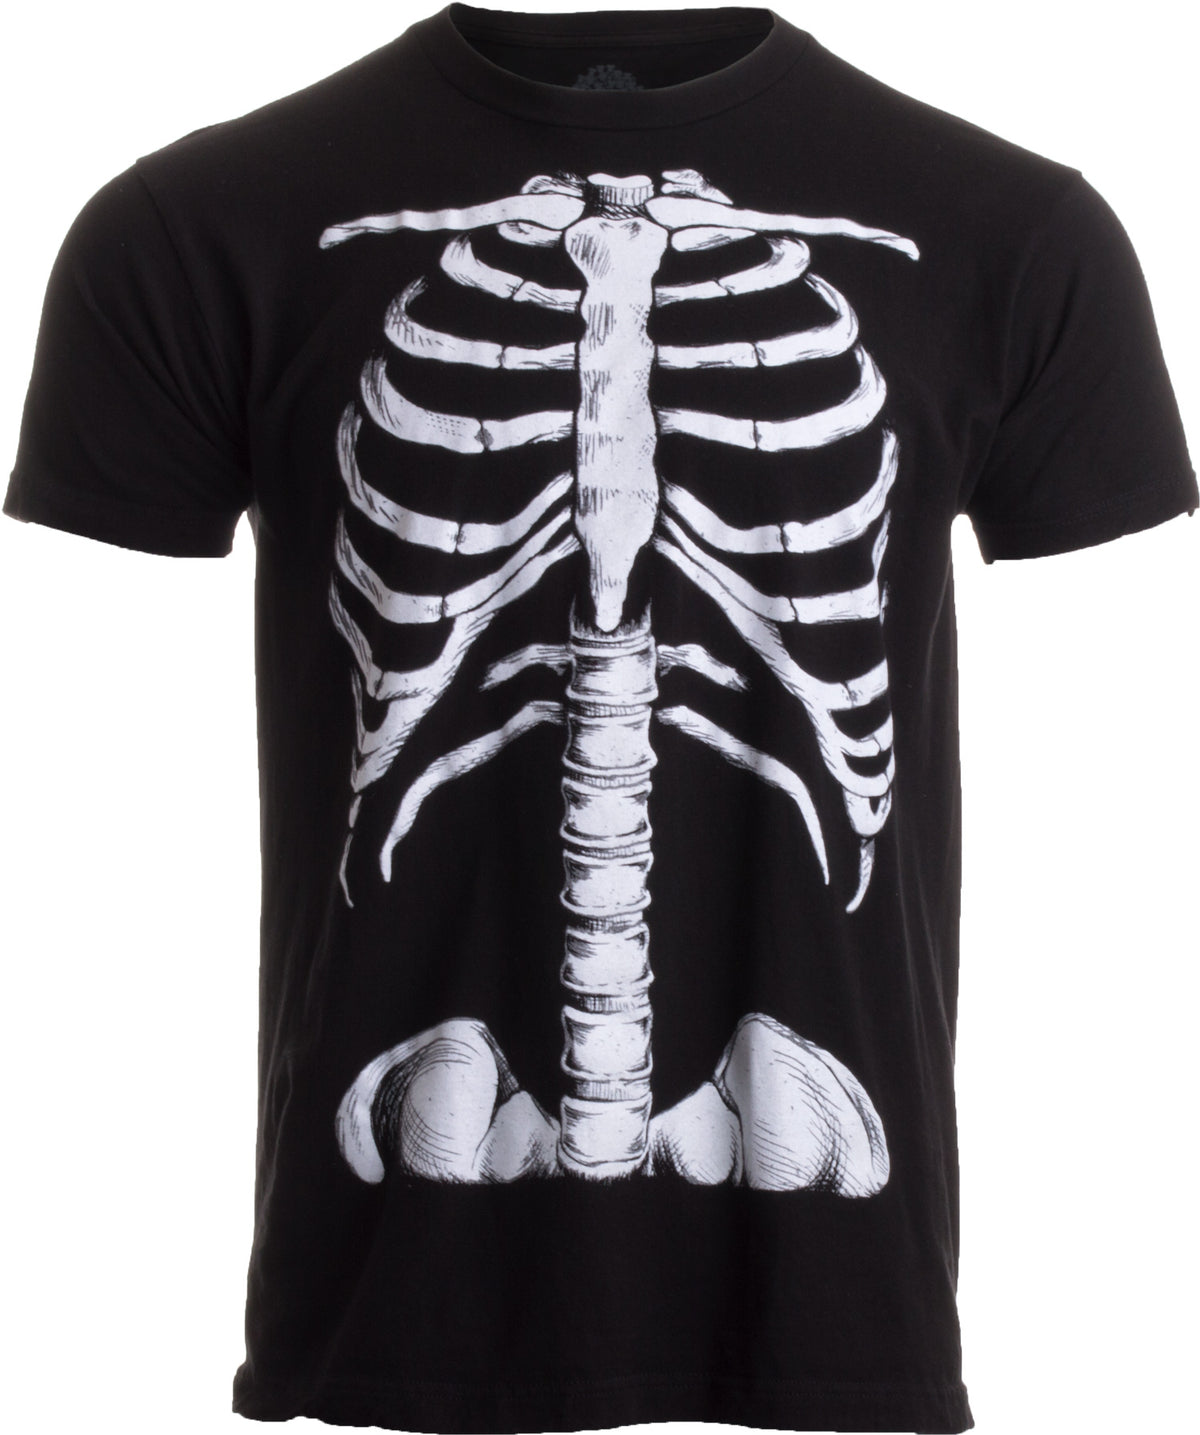 Skeleton Rib Cage Glow-in-the-Dark Costume Tee - Men's